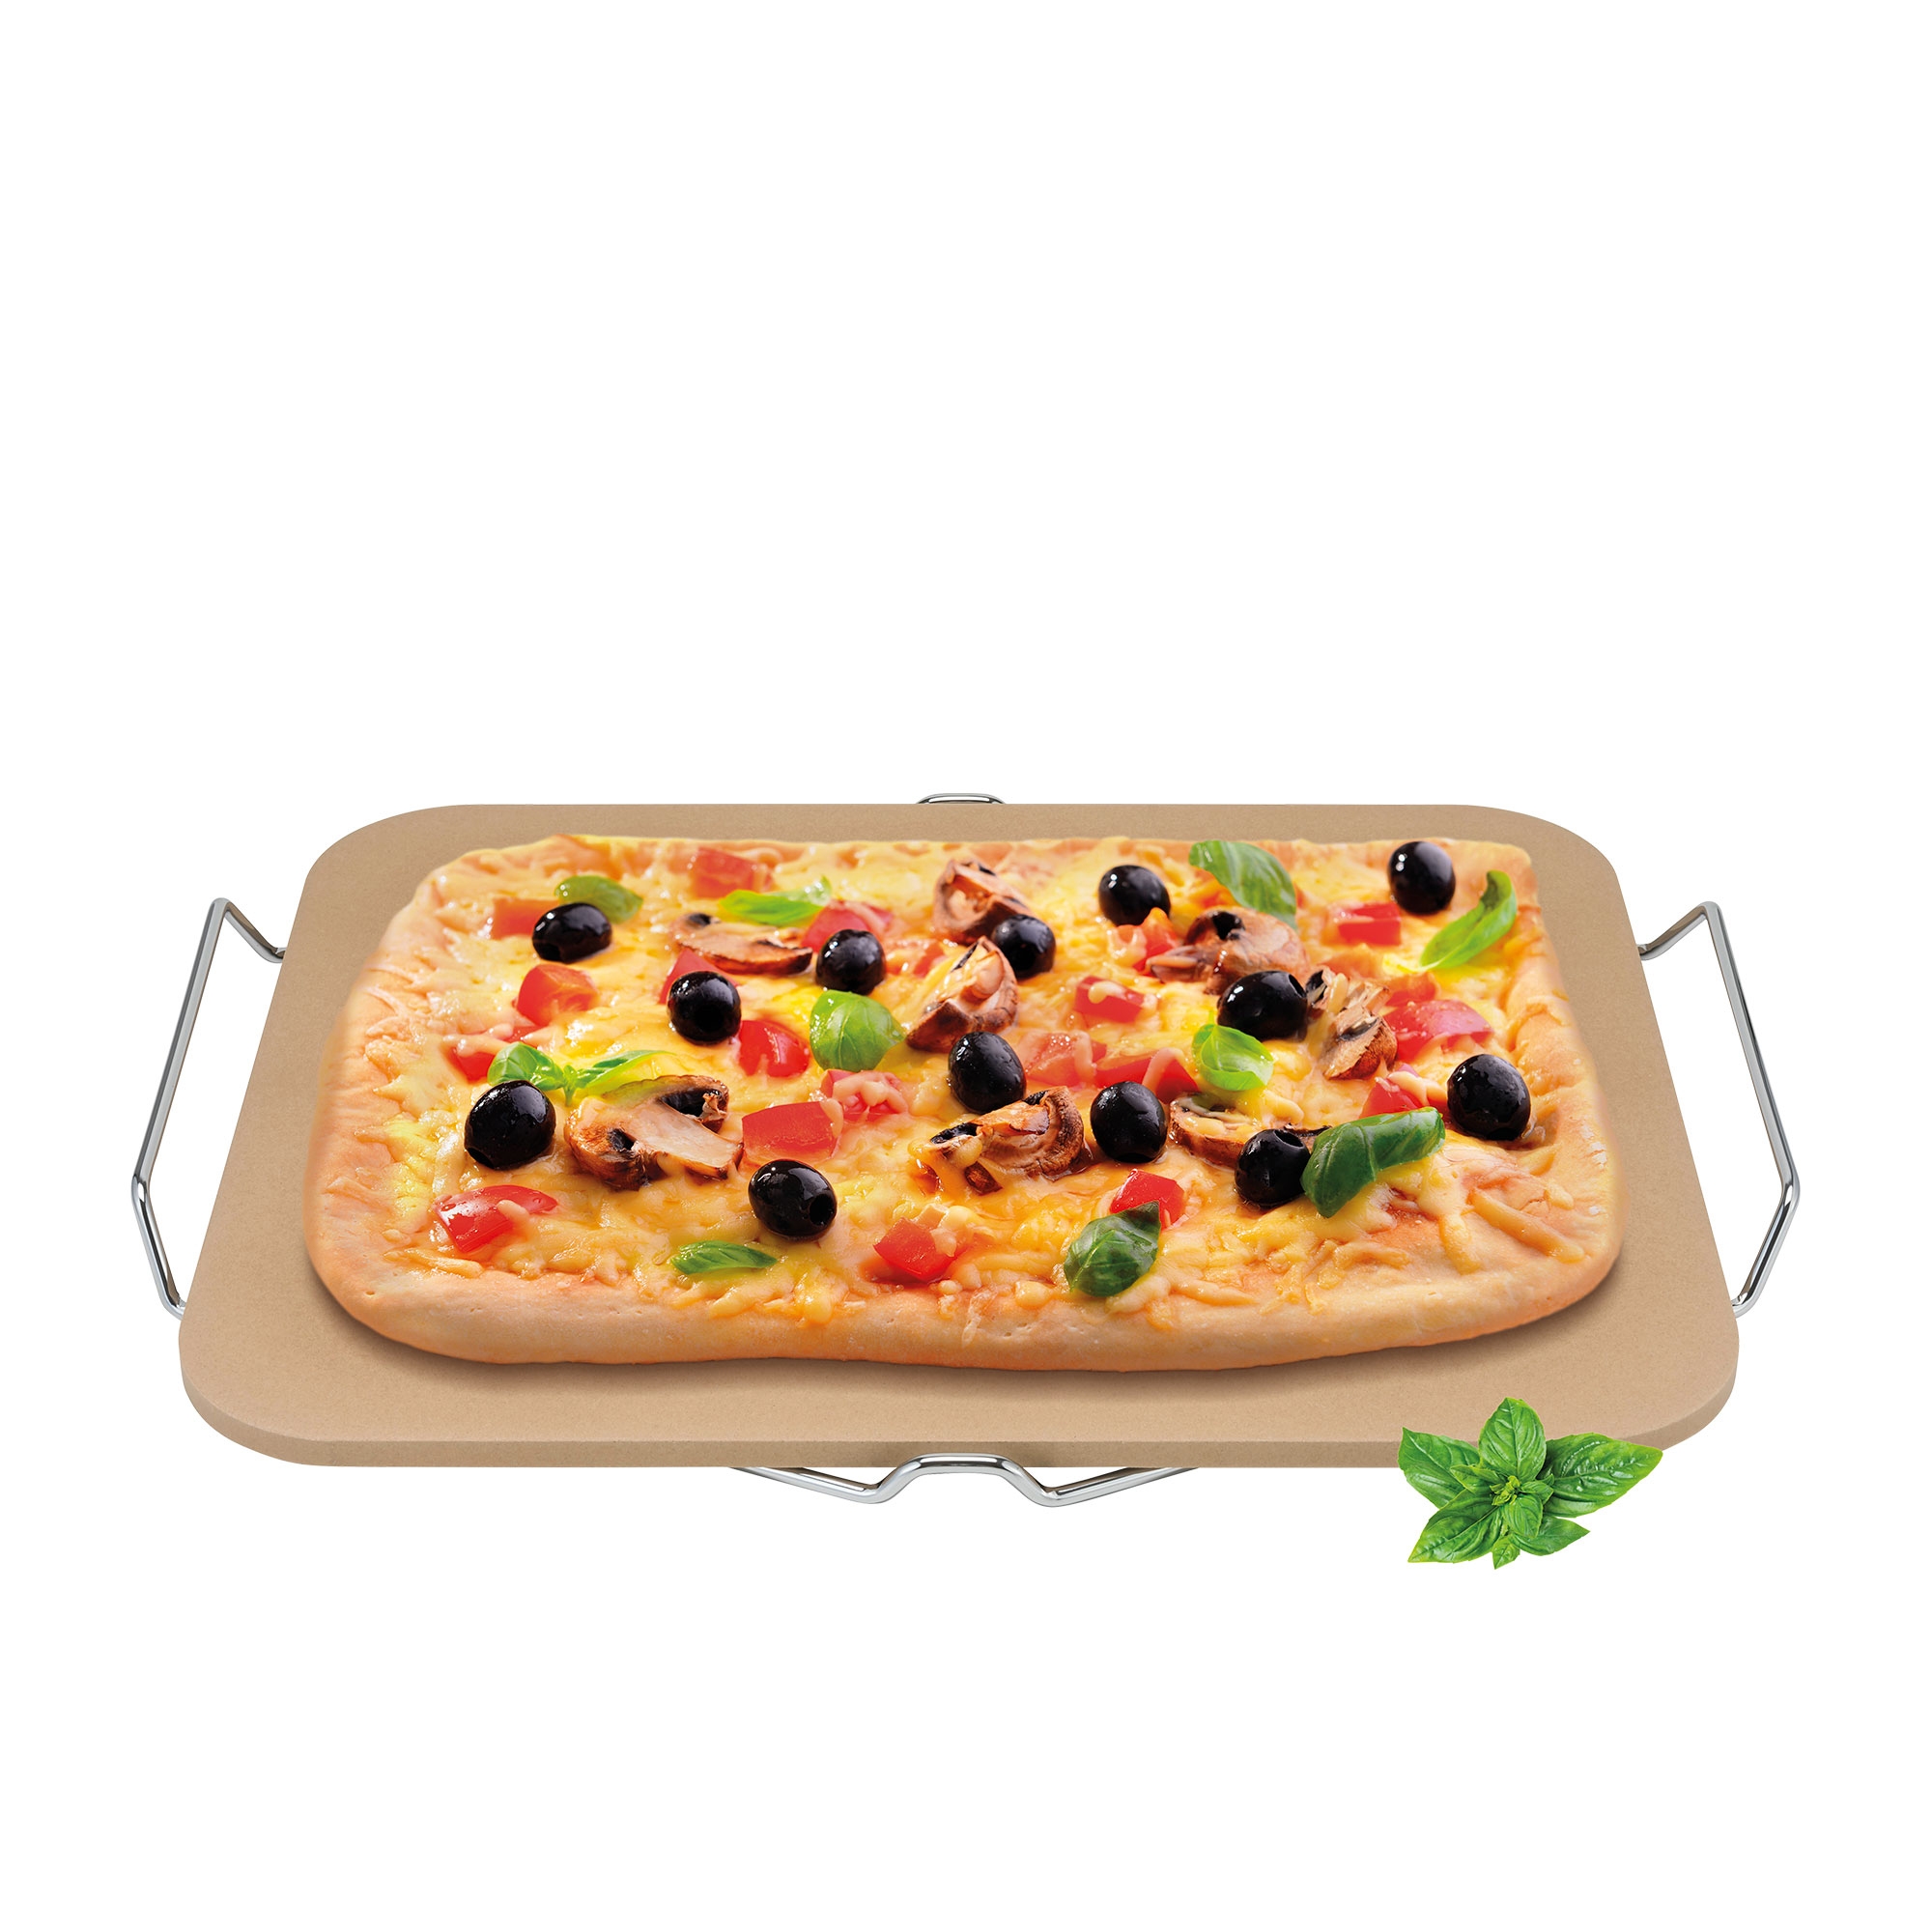 Avanti Rectangular Pizza Stone with Rack 38x30cm Image 1